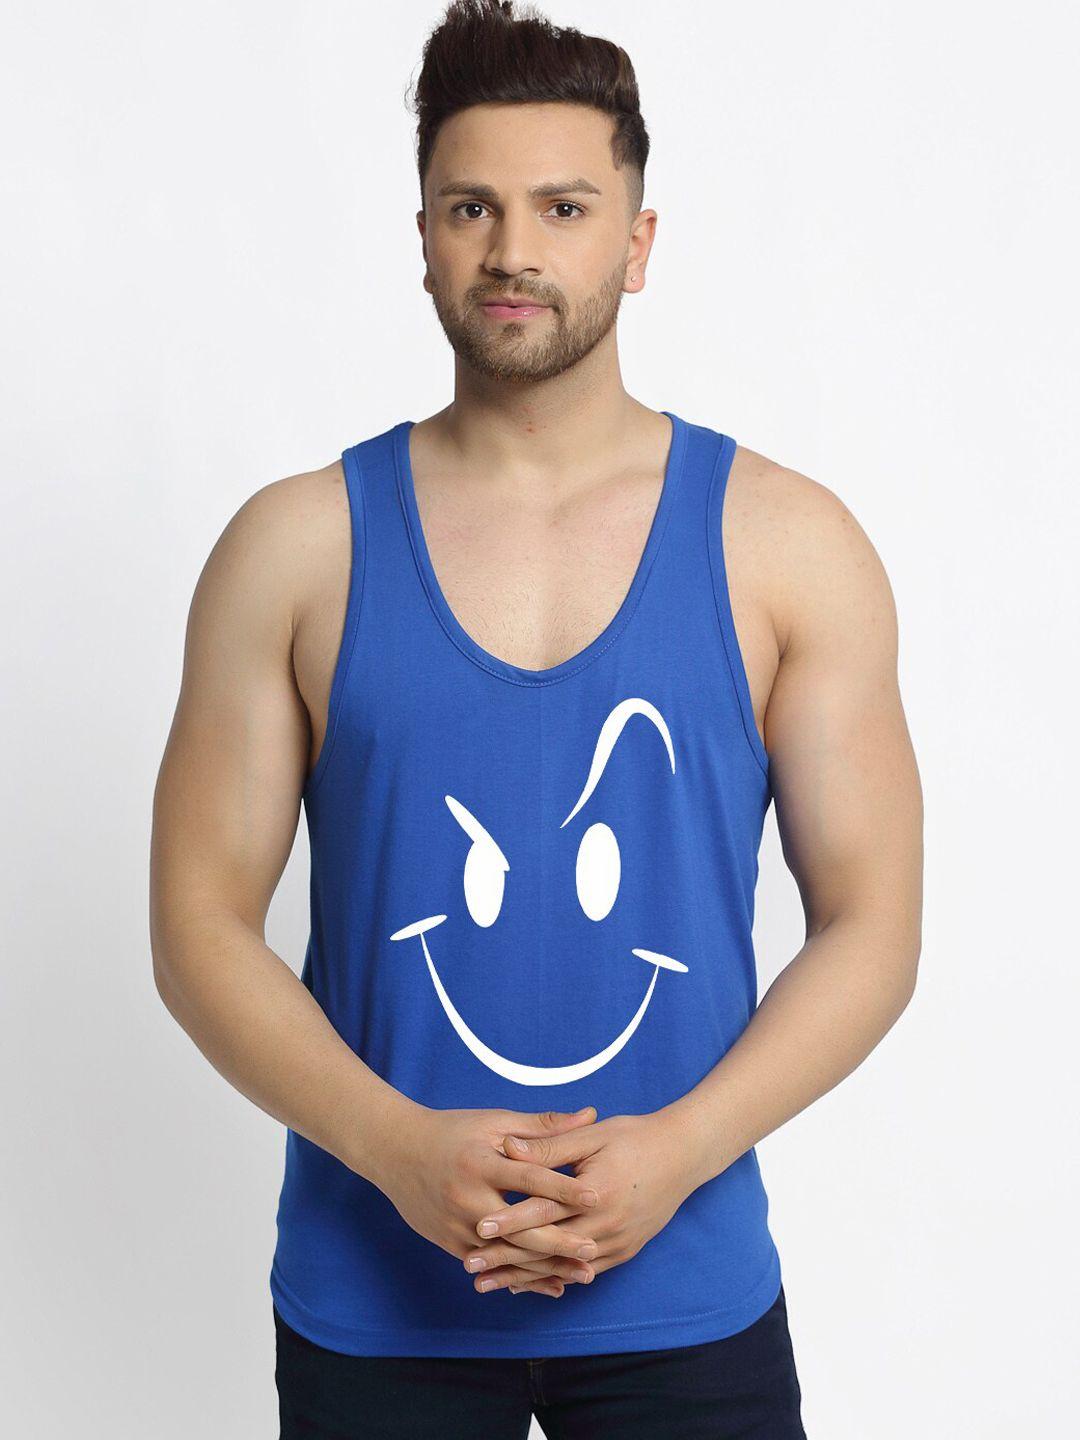 friskers-men-blue-smiley-printed-sleeveless-cotton-innerwear-vests-2c211-05-s-blue